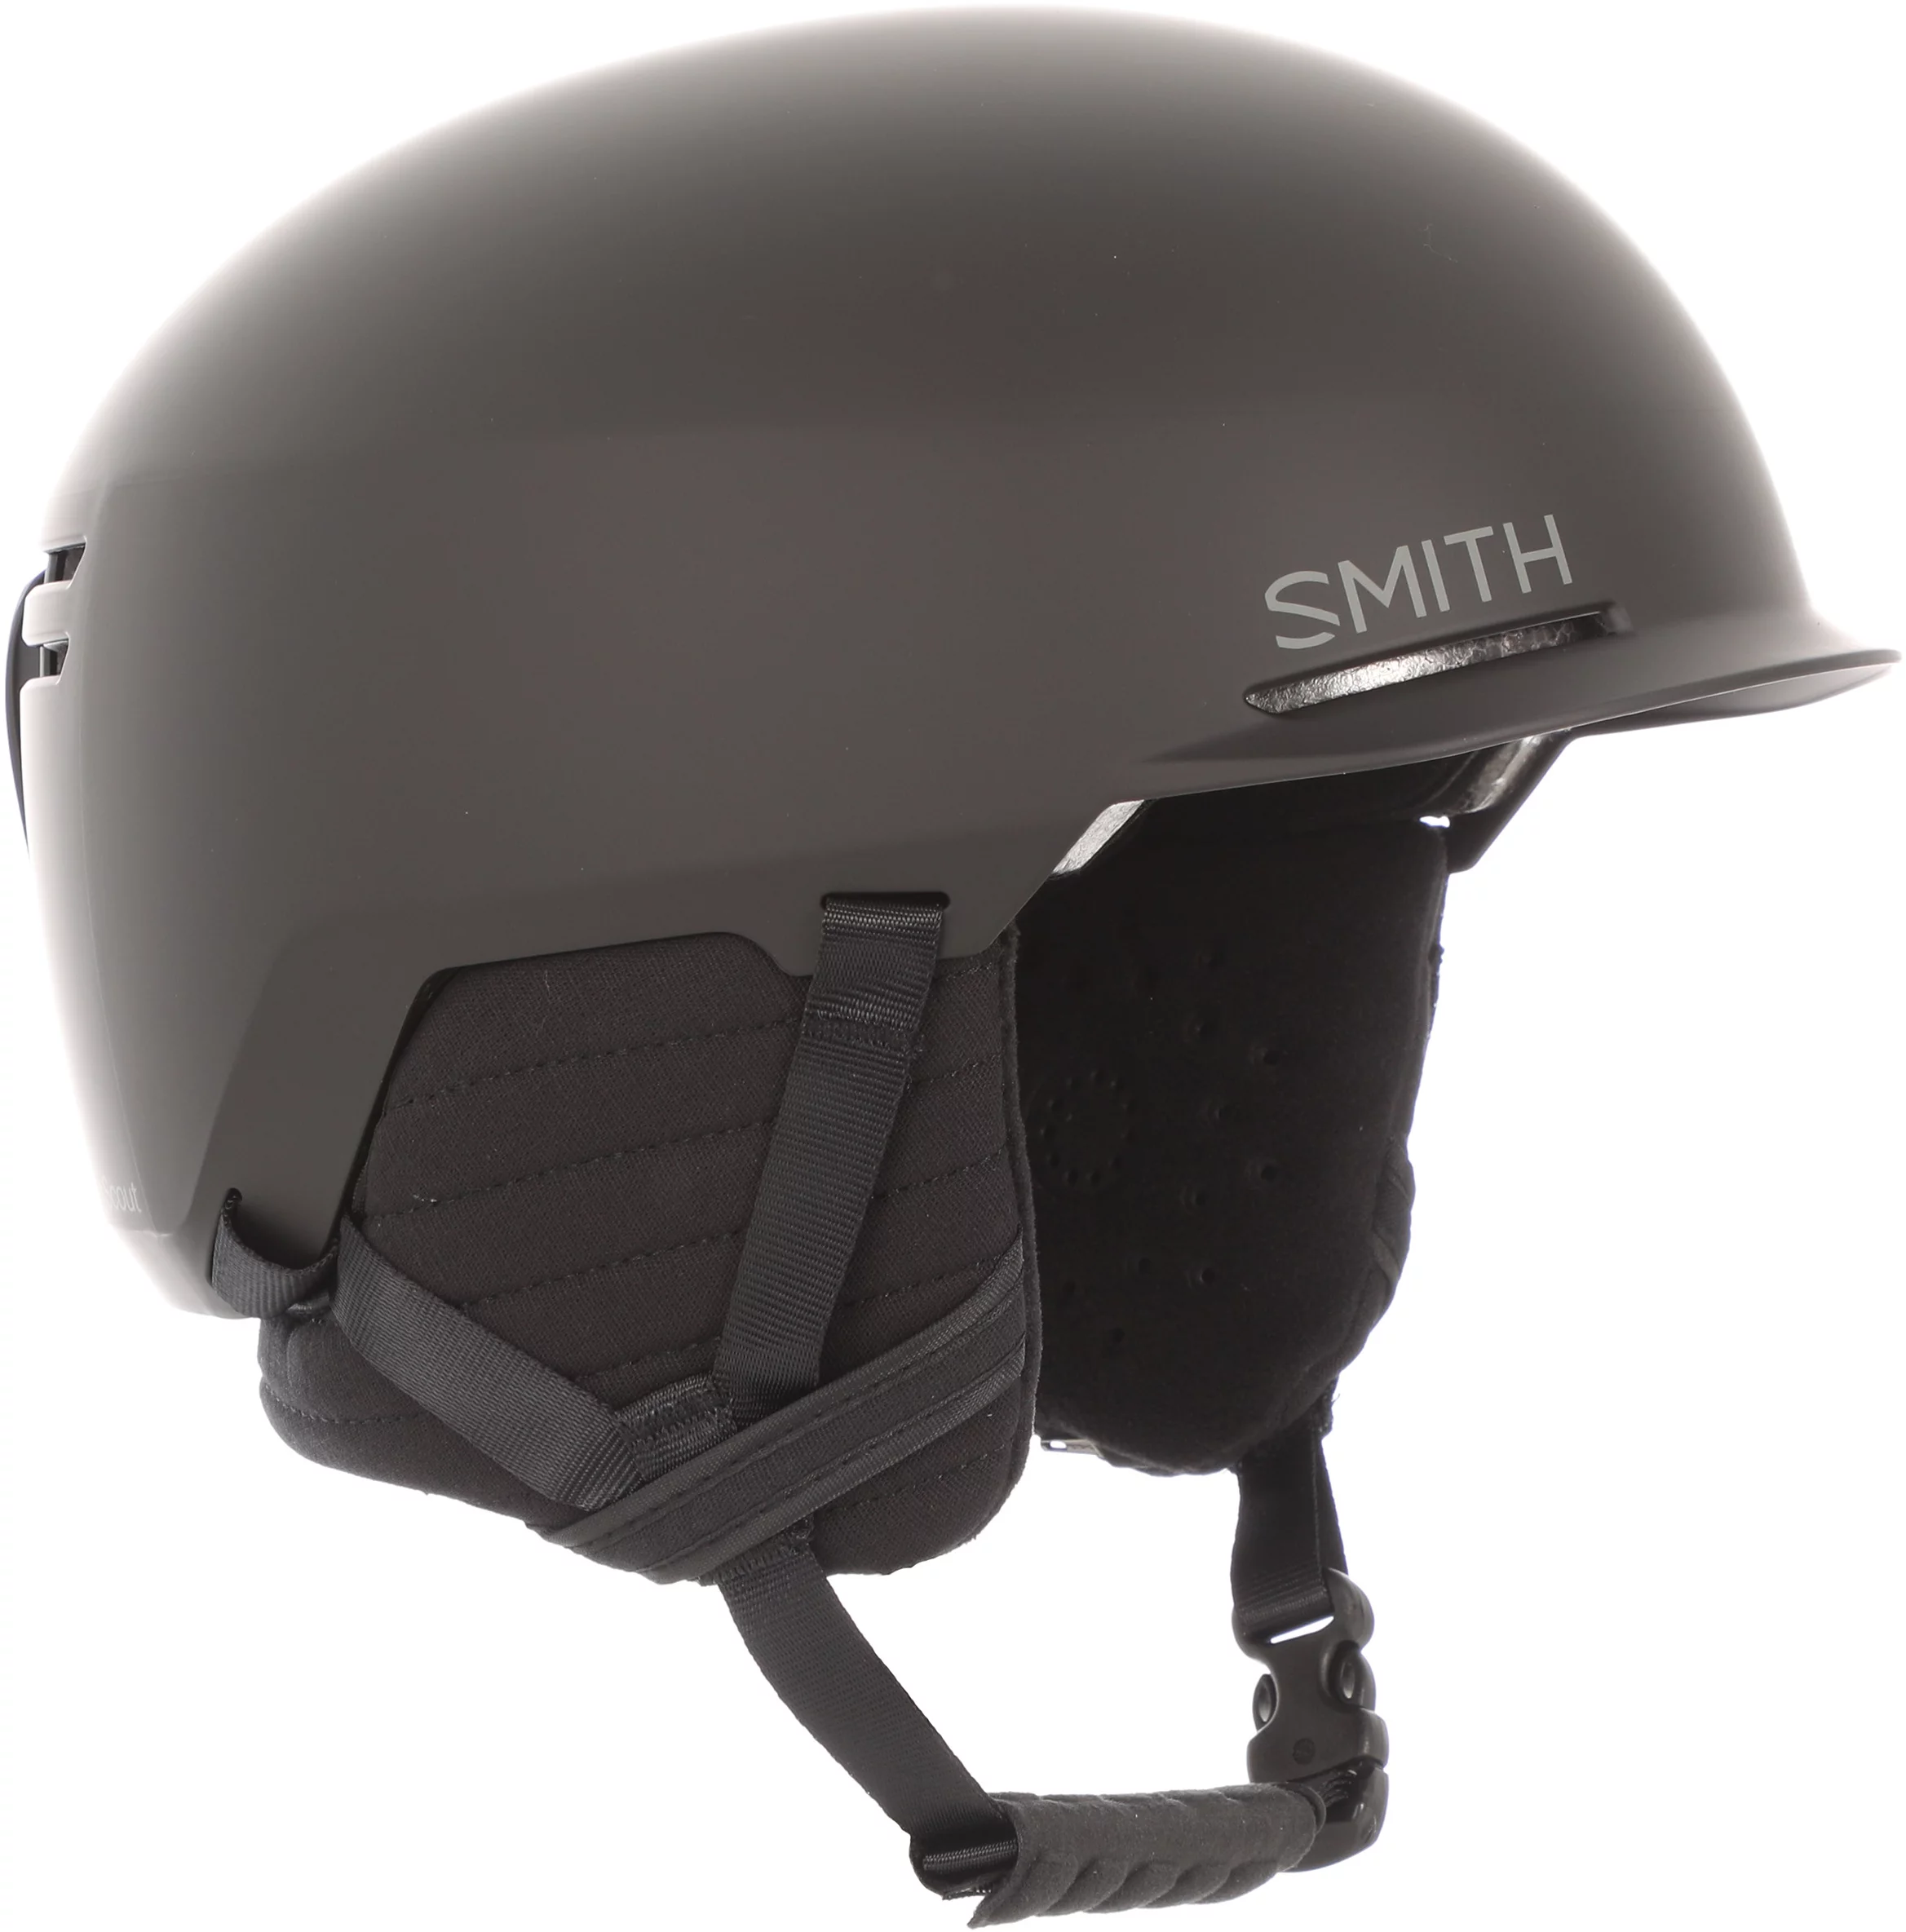 Smith esquí snowboardhelm Scout MIPS casco 2021 maletero Black Helmet Sport casco